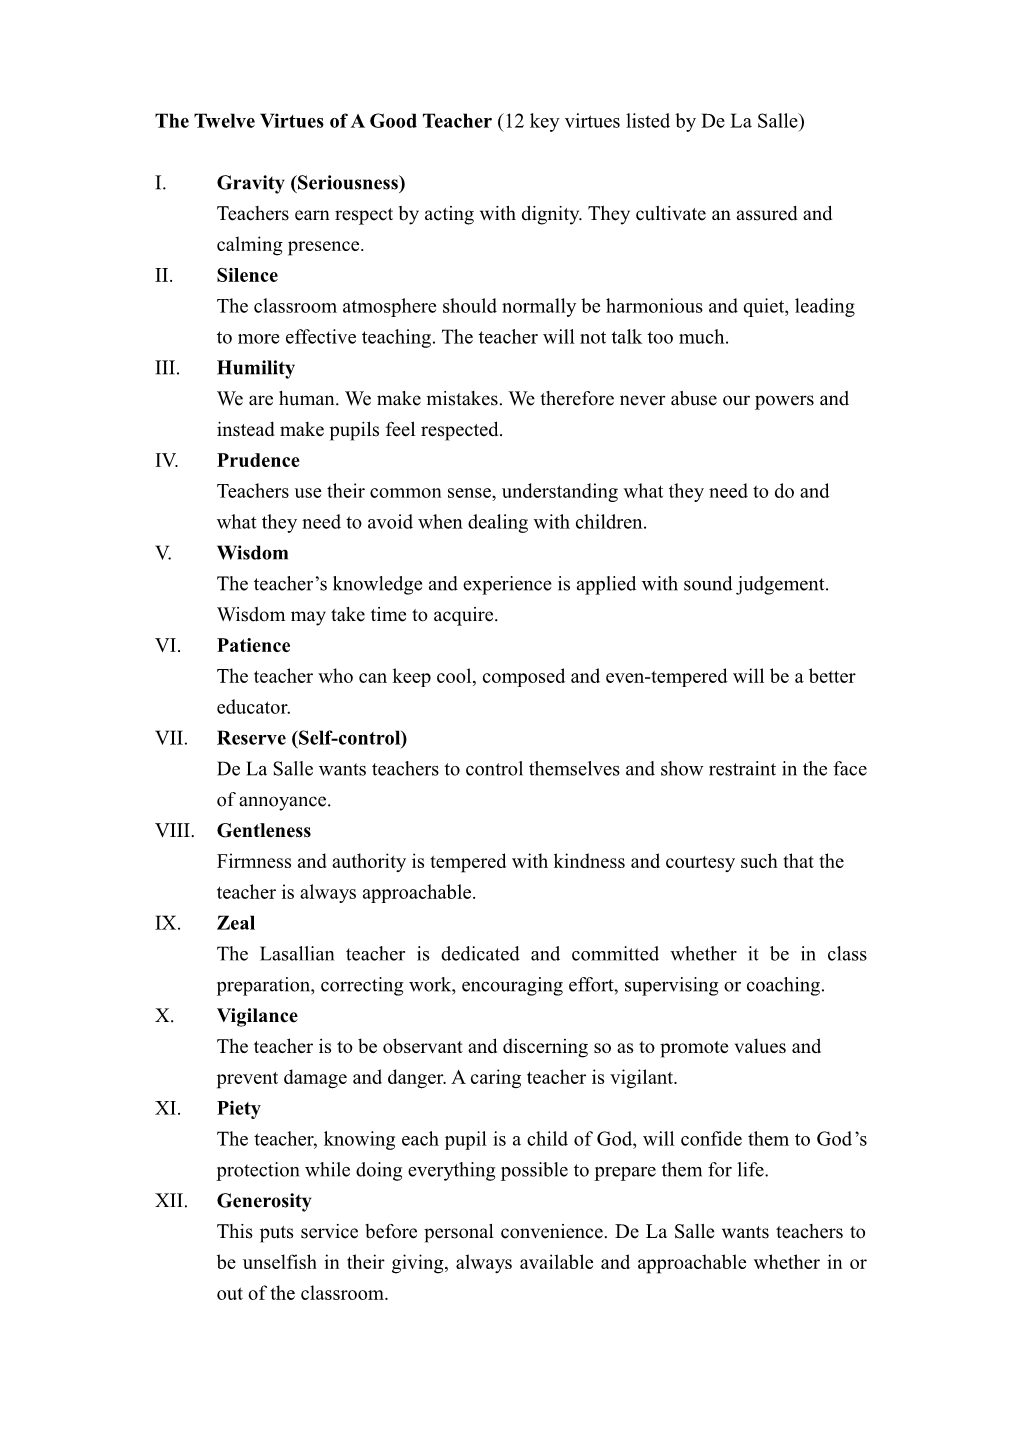 The Twelve Virtues of a Good Teacher (12 Key Virtues Listed by De La Salle)